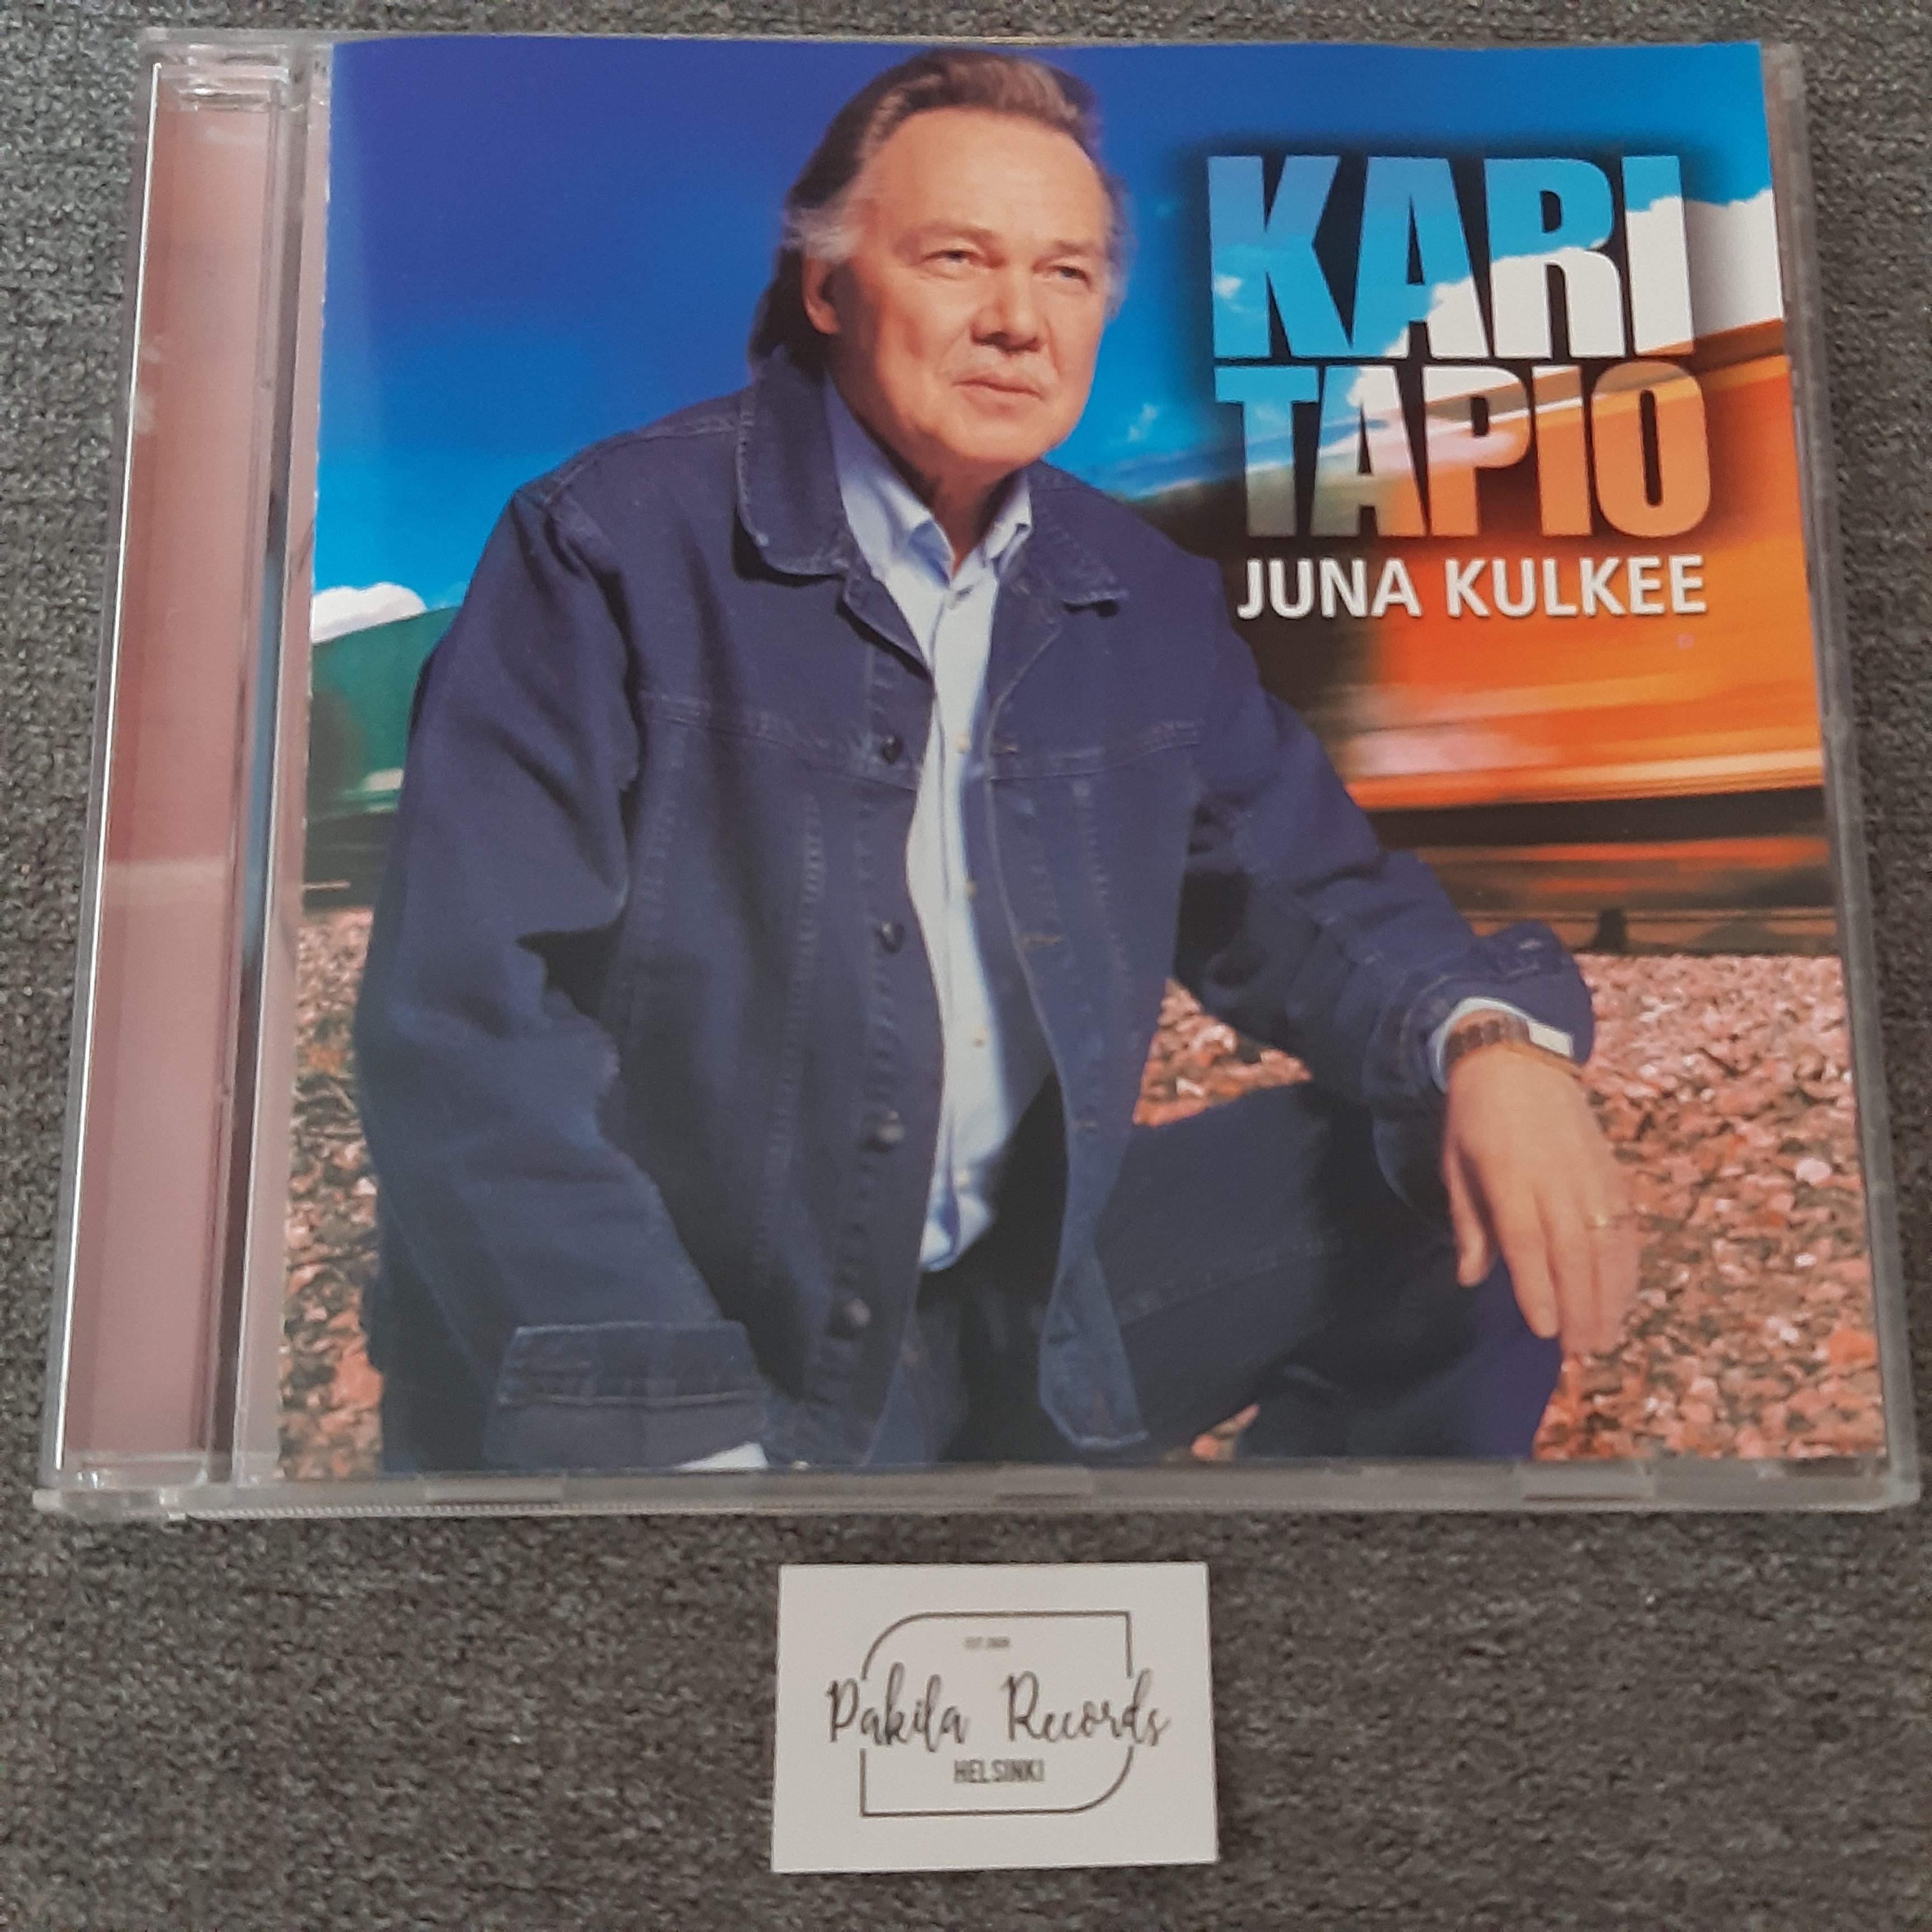 Kari Tapio - Juna kulkee - CD (käytetty)